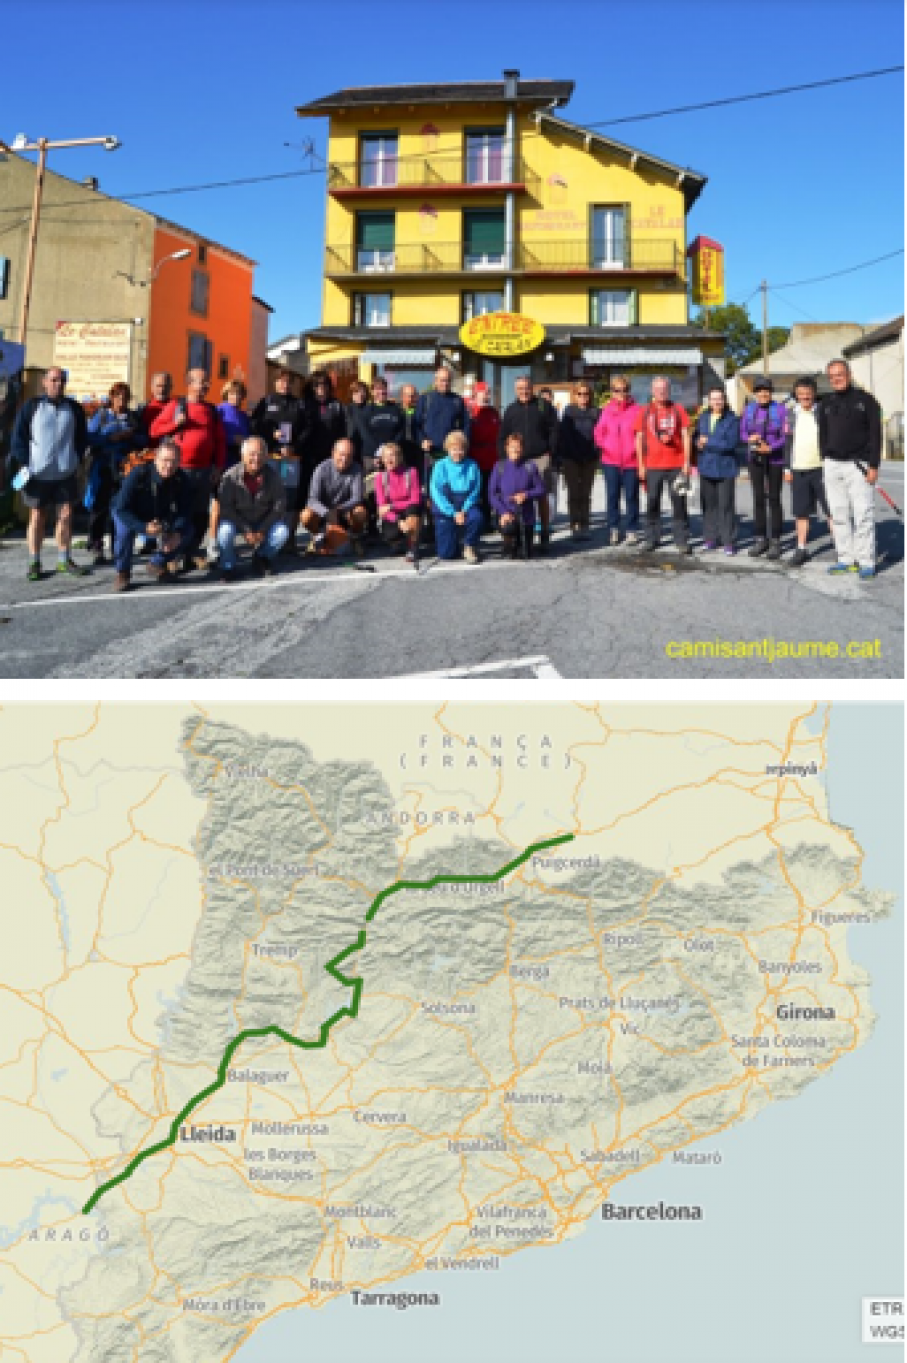 Camí de Sant Jaume del Segre, 330,20 km.